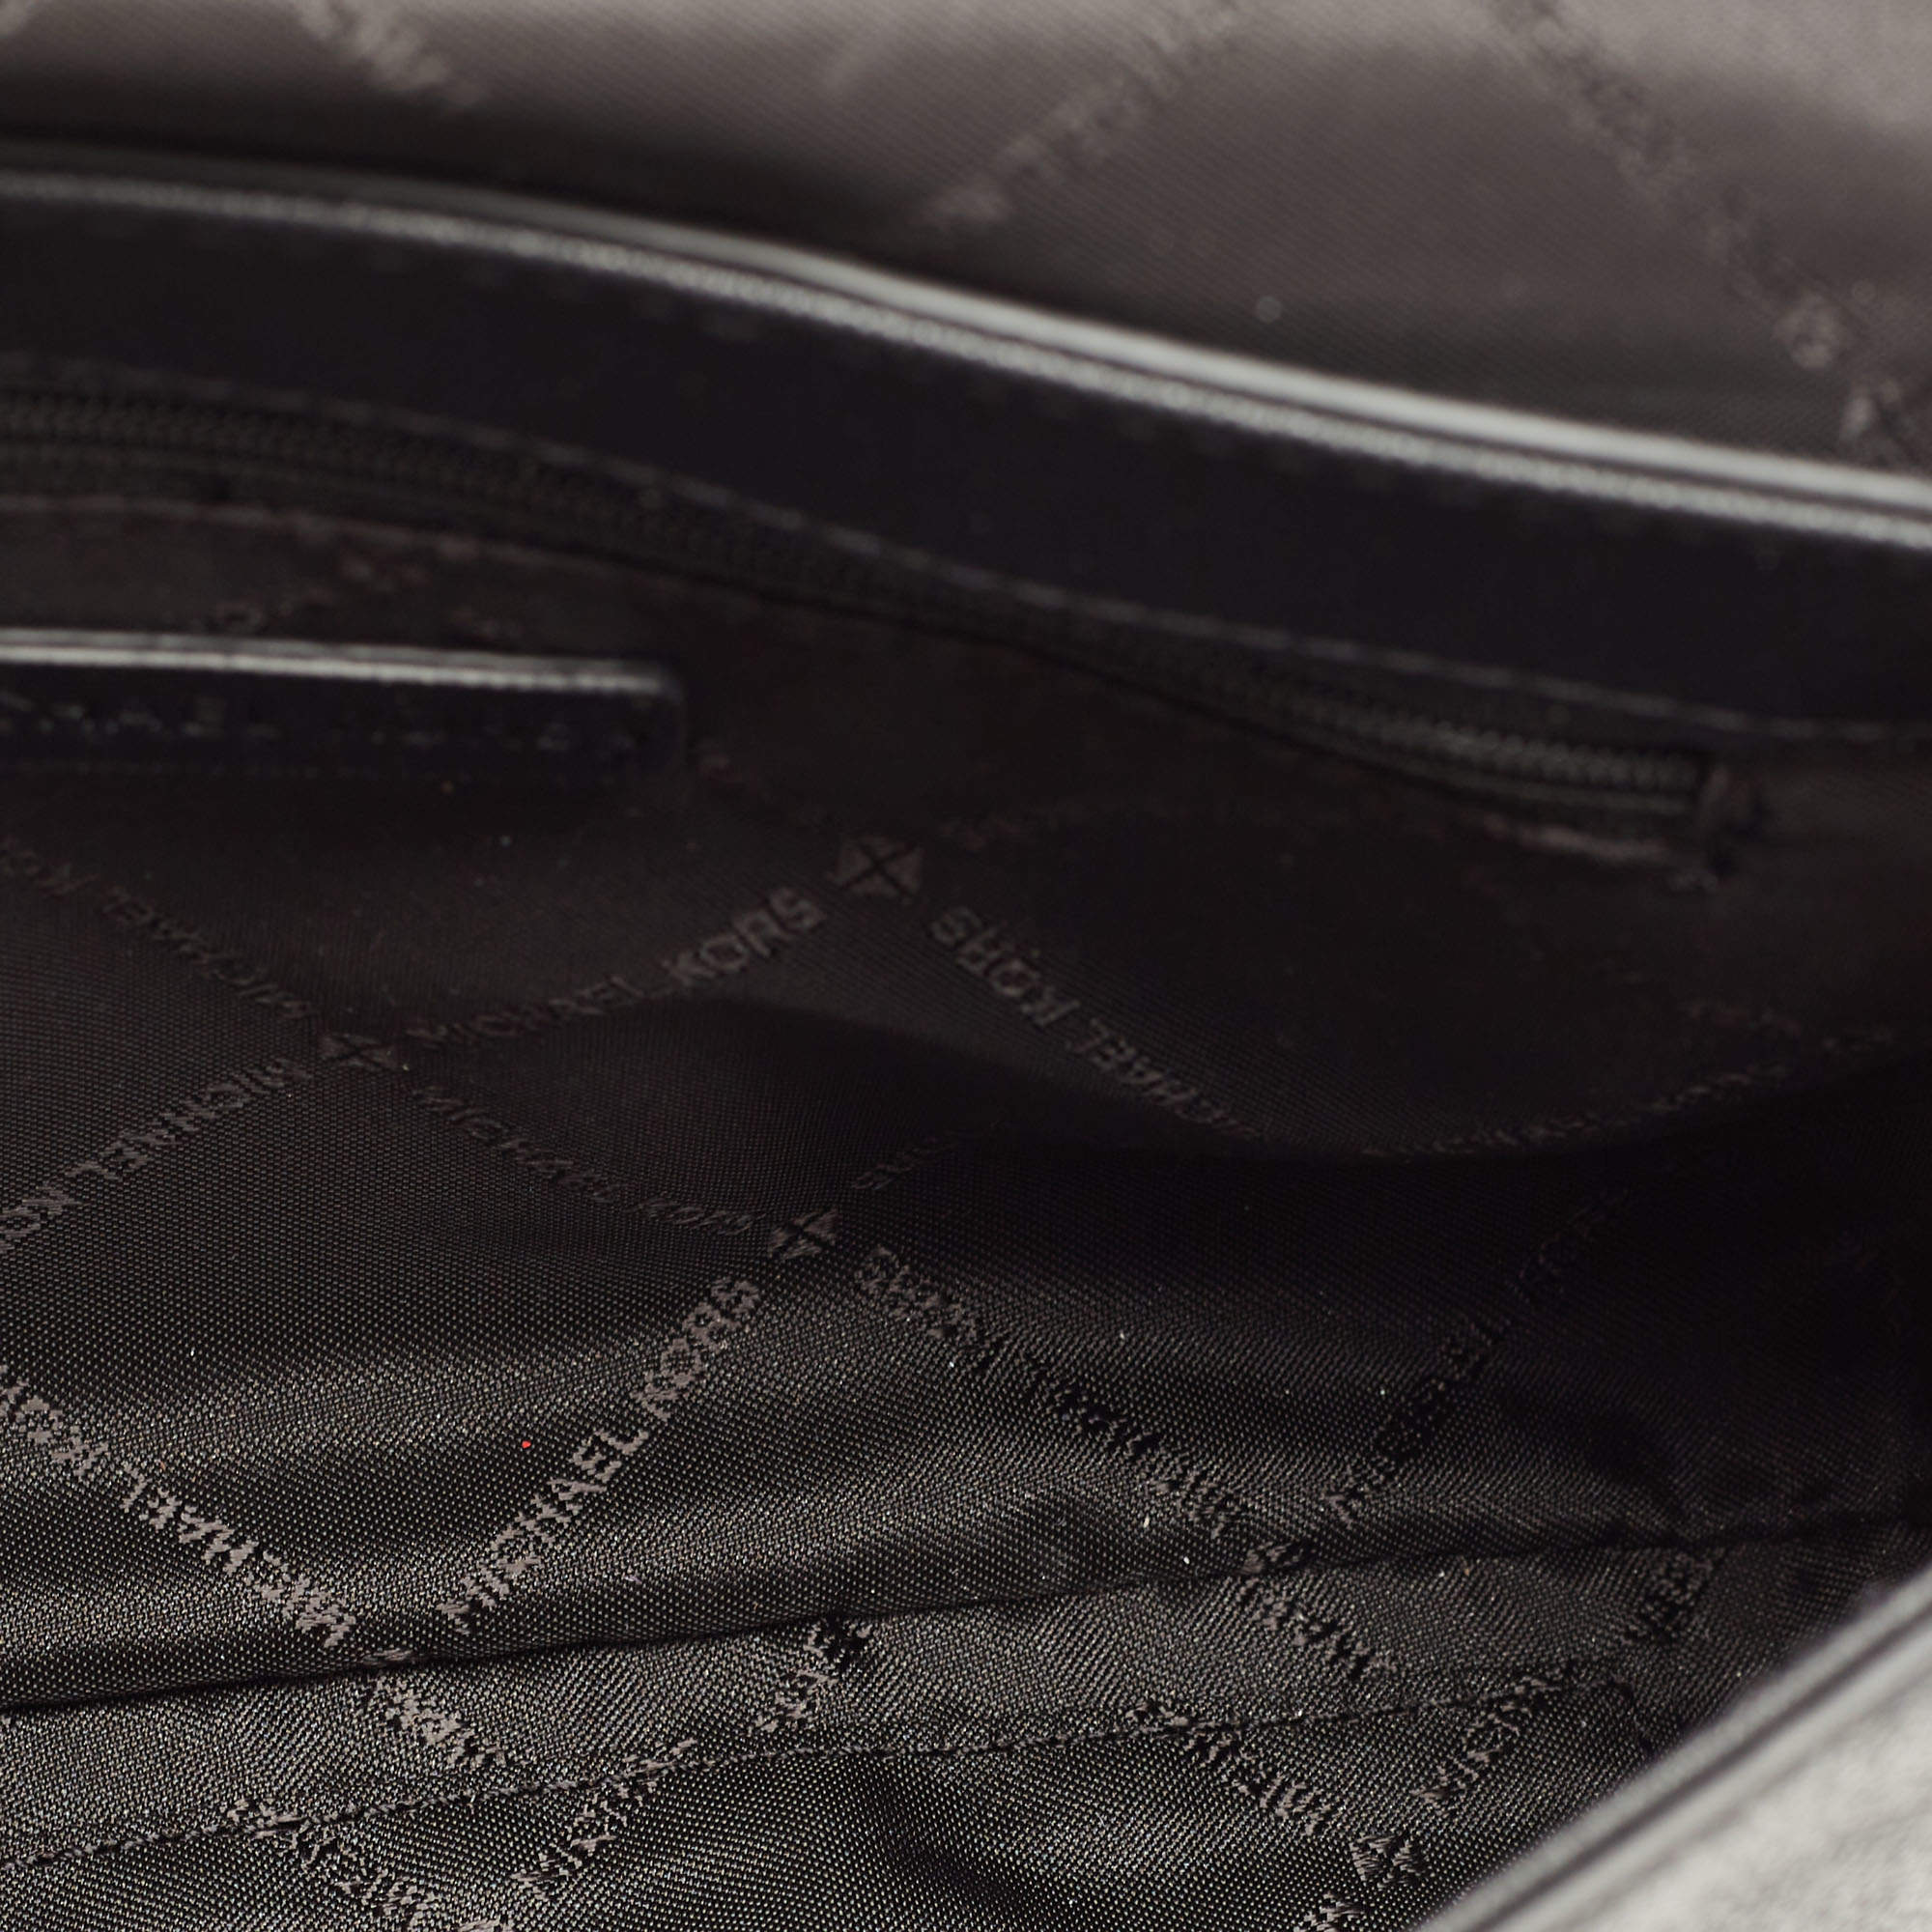 Michael Kors Medium Saffiano Leather Convertible Crossbody Bag in Black by  @springflingmnlph 